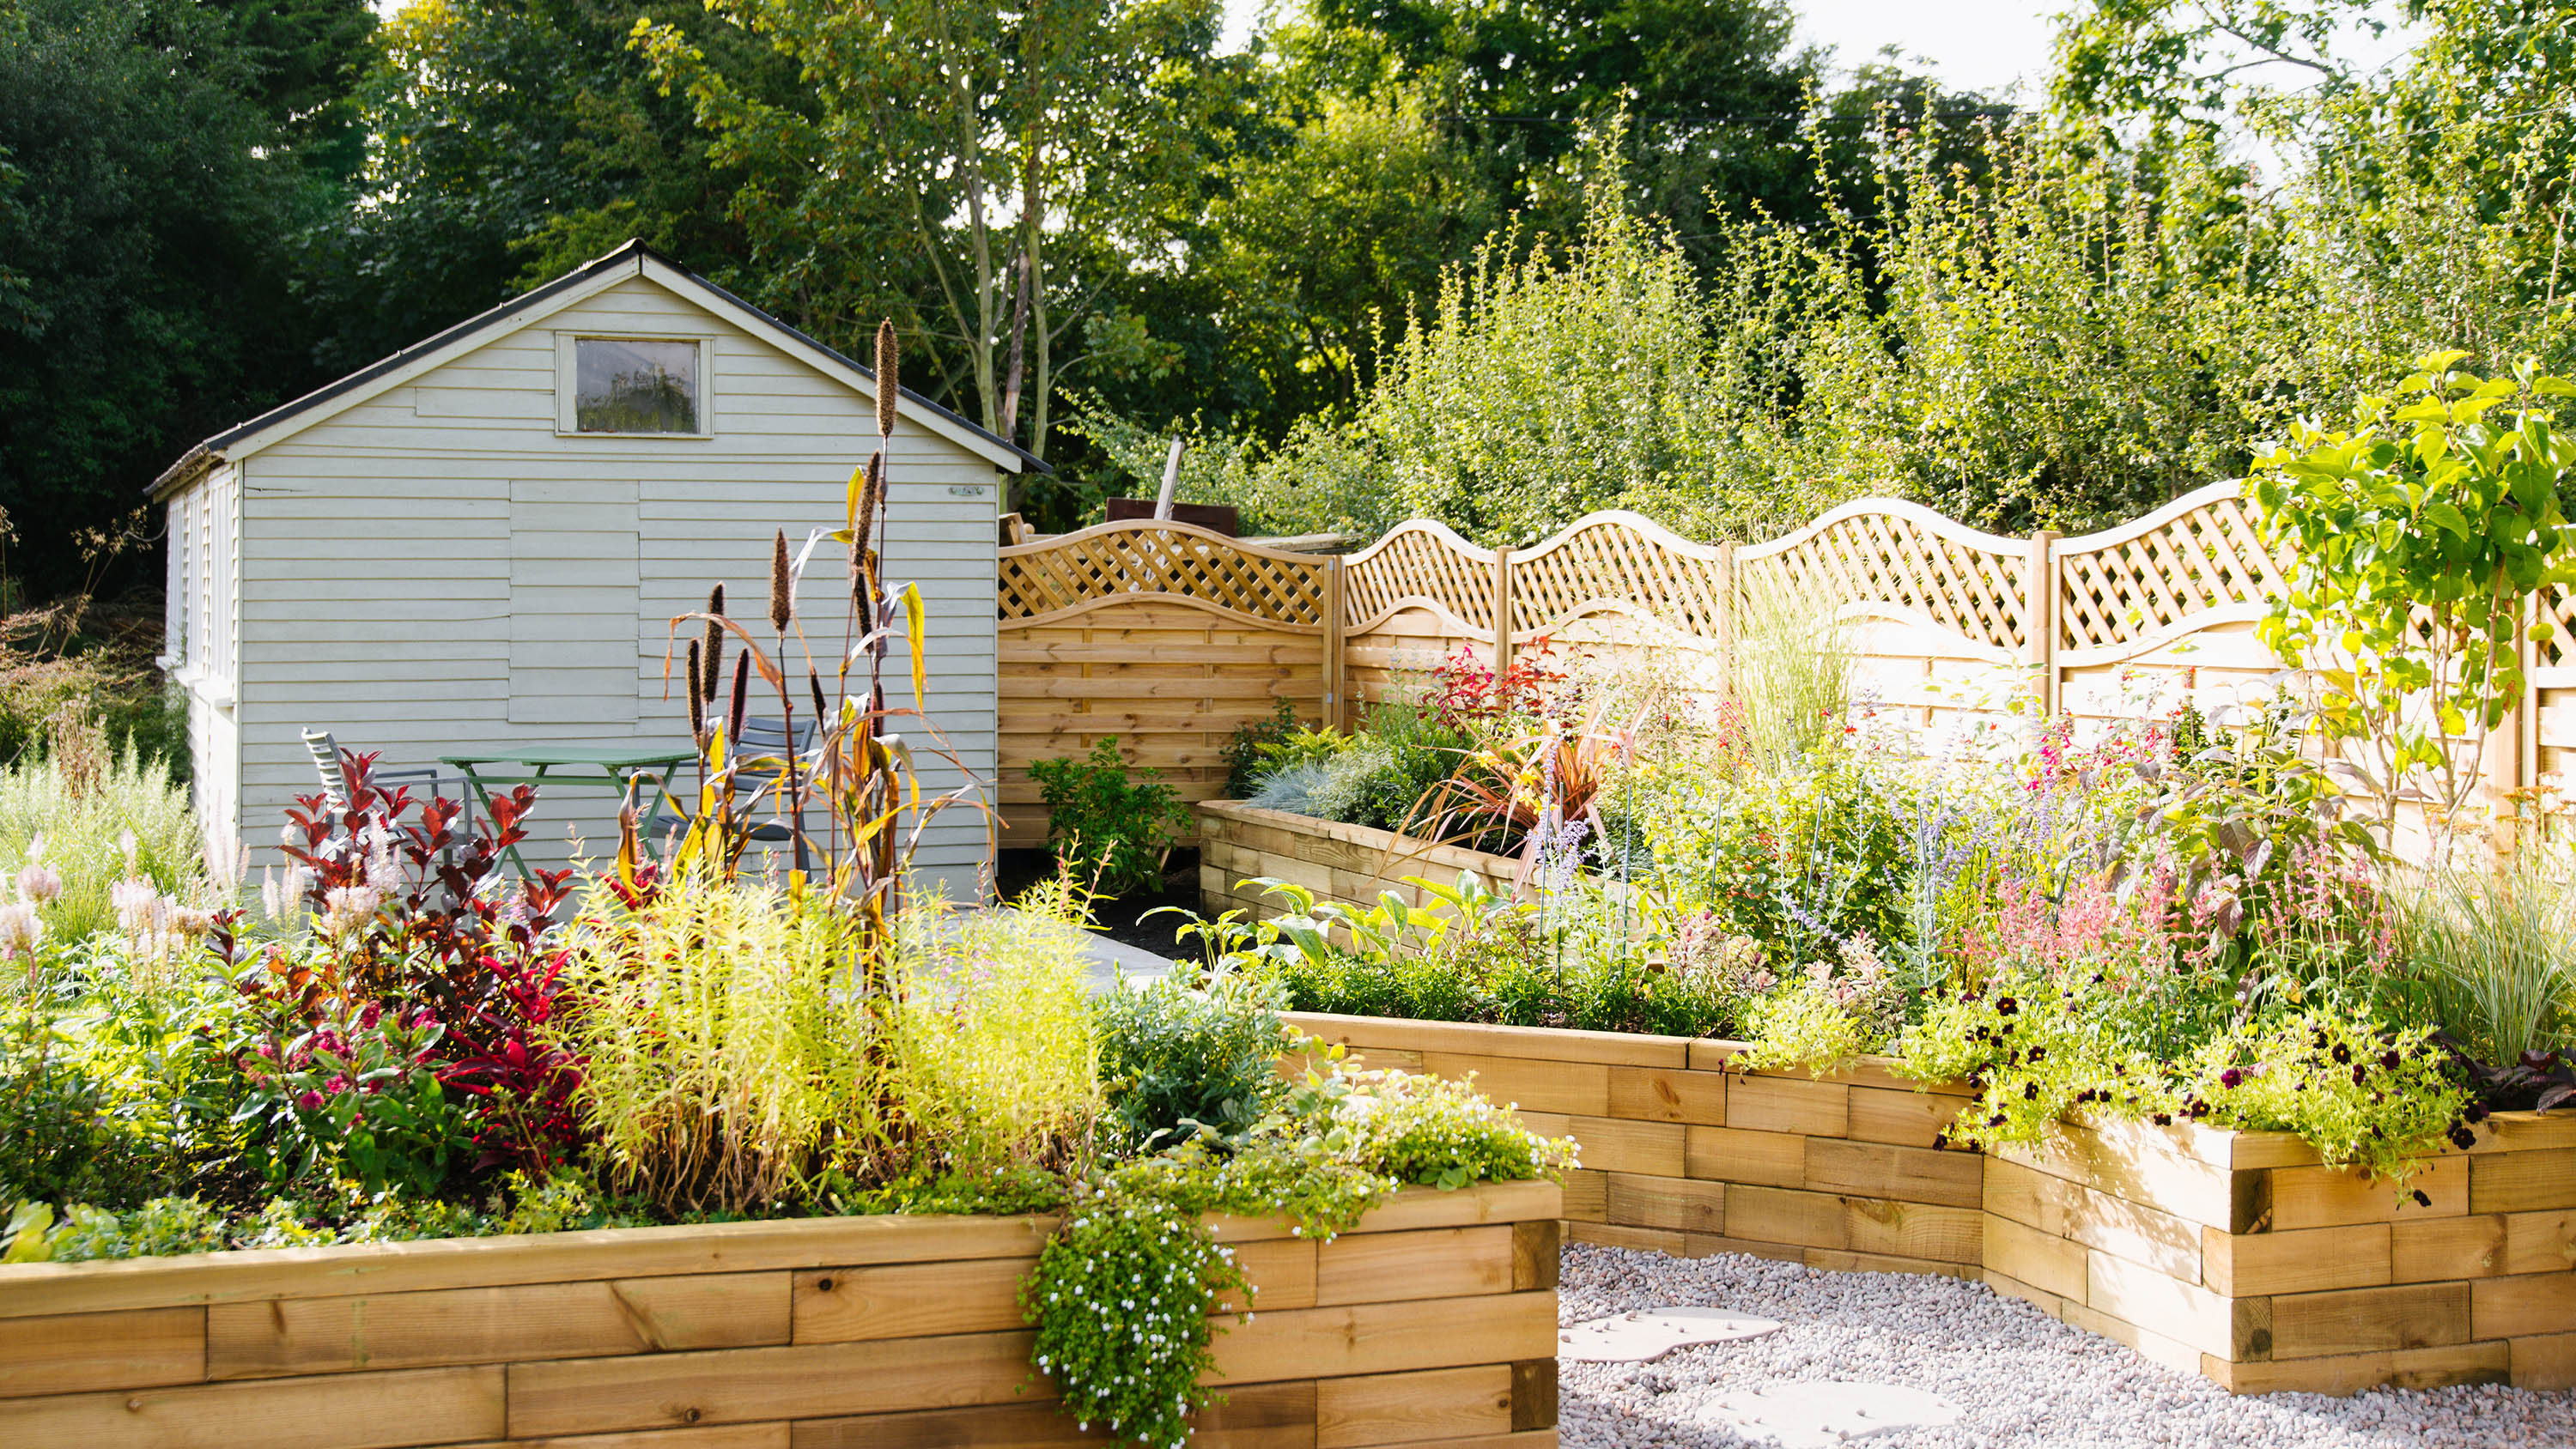 Low maintenance garden ideas 21 stylish ways to create an easy ...